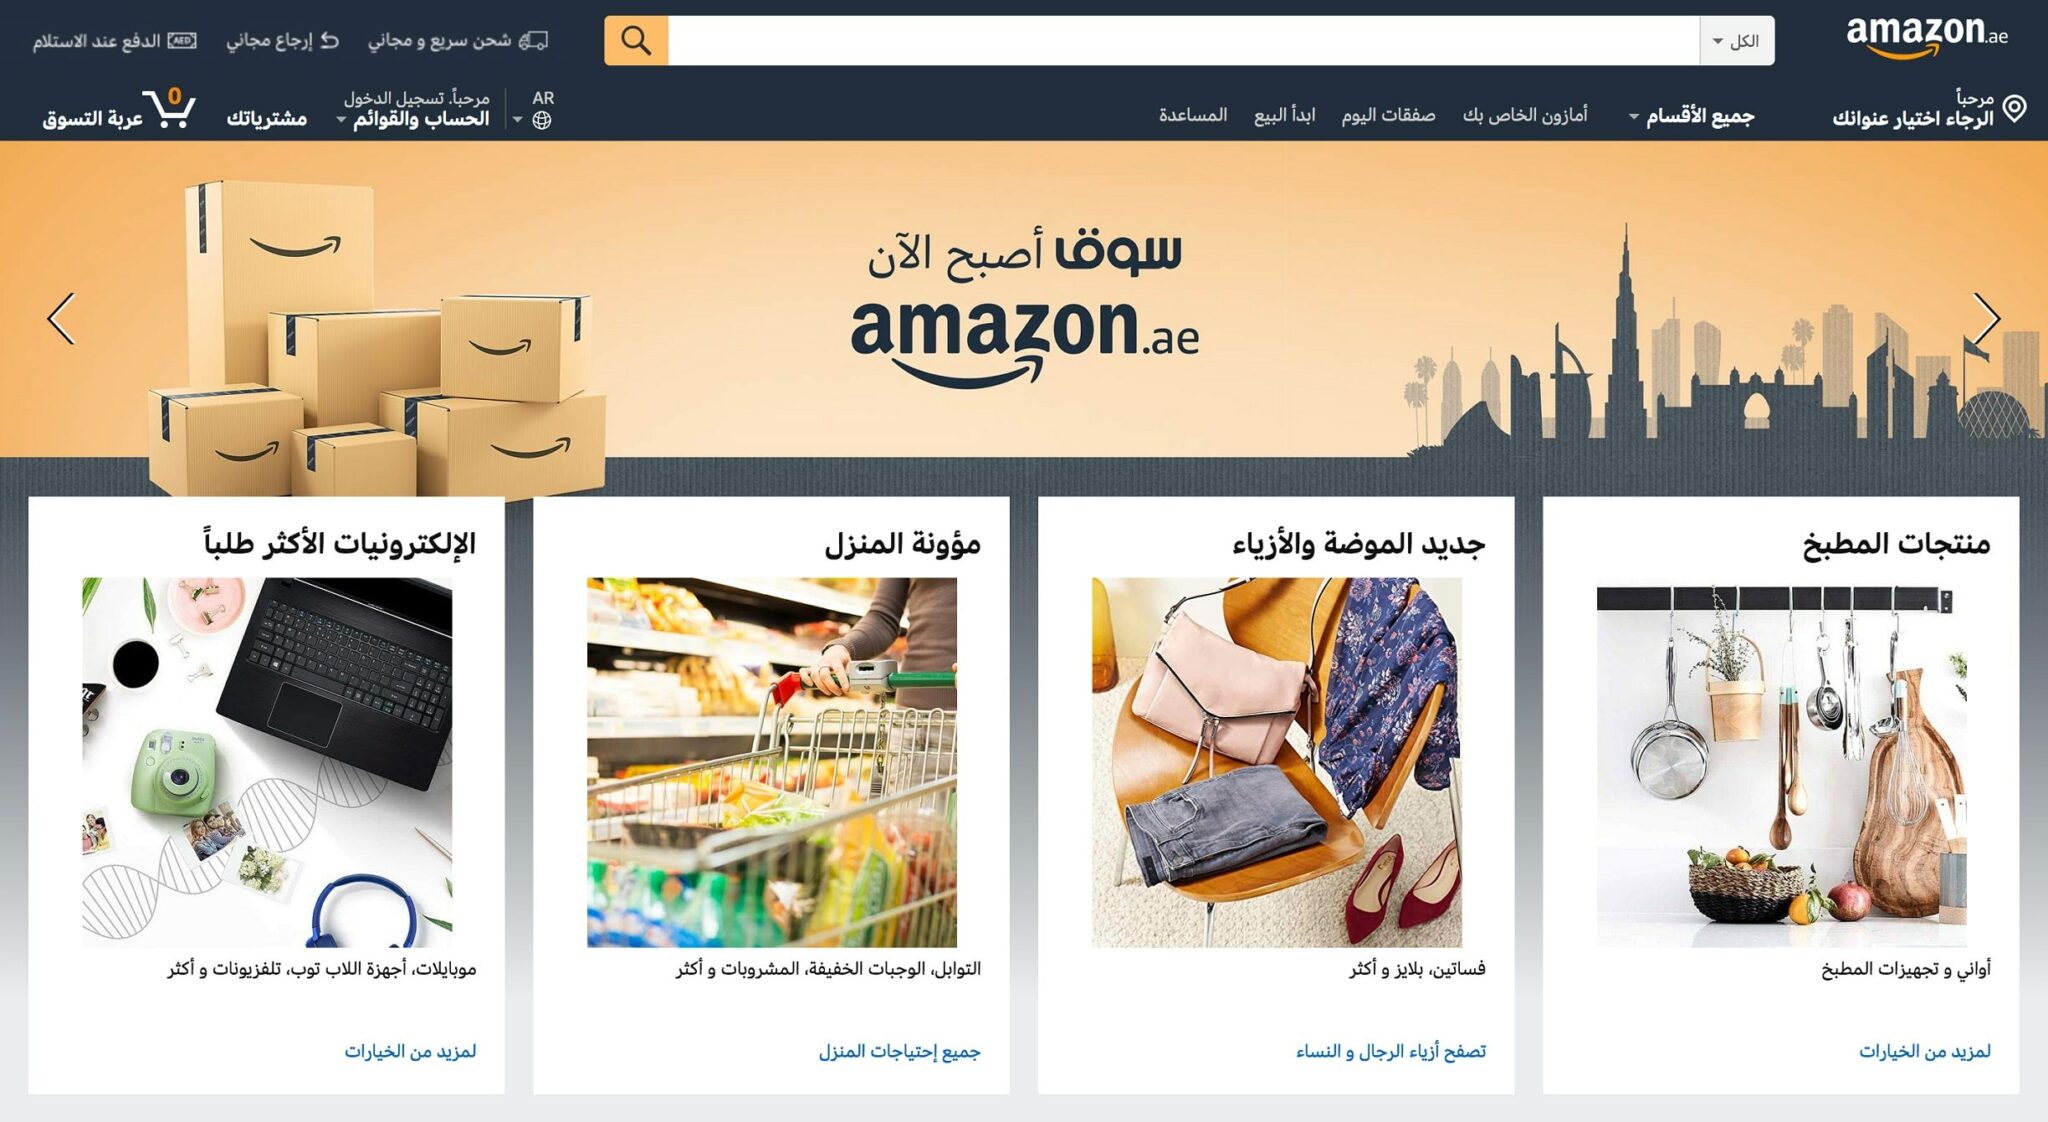 Amazon.ae replaces Souq.com in UAE. Will Saudi Arabia Be Next?